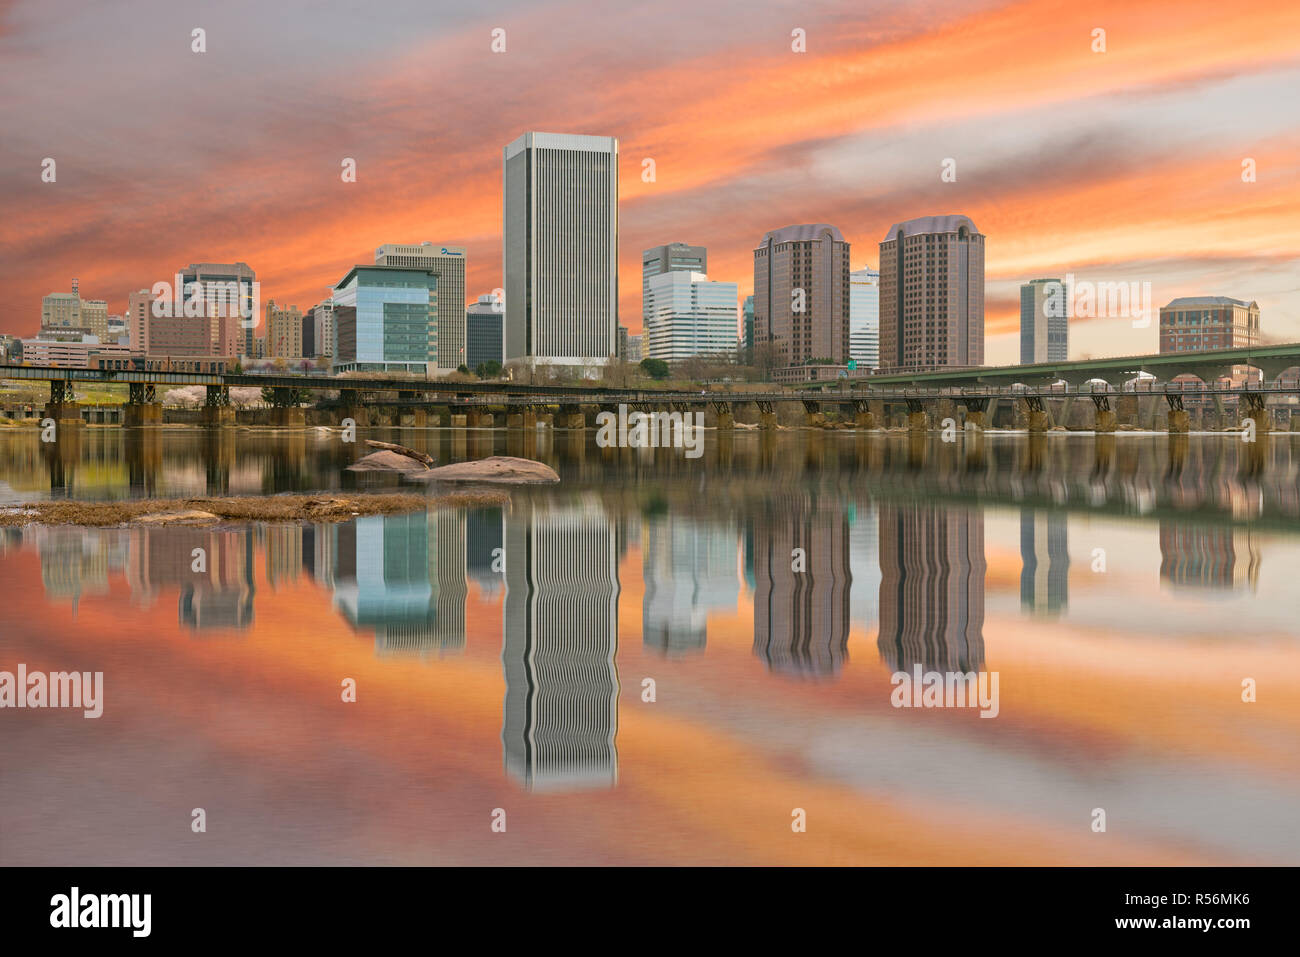 Reflection of the Richmond,Virginia morning city skyline along the James River. Stock Photo